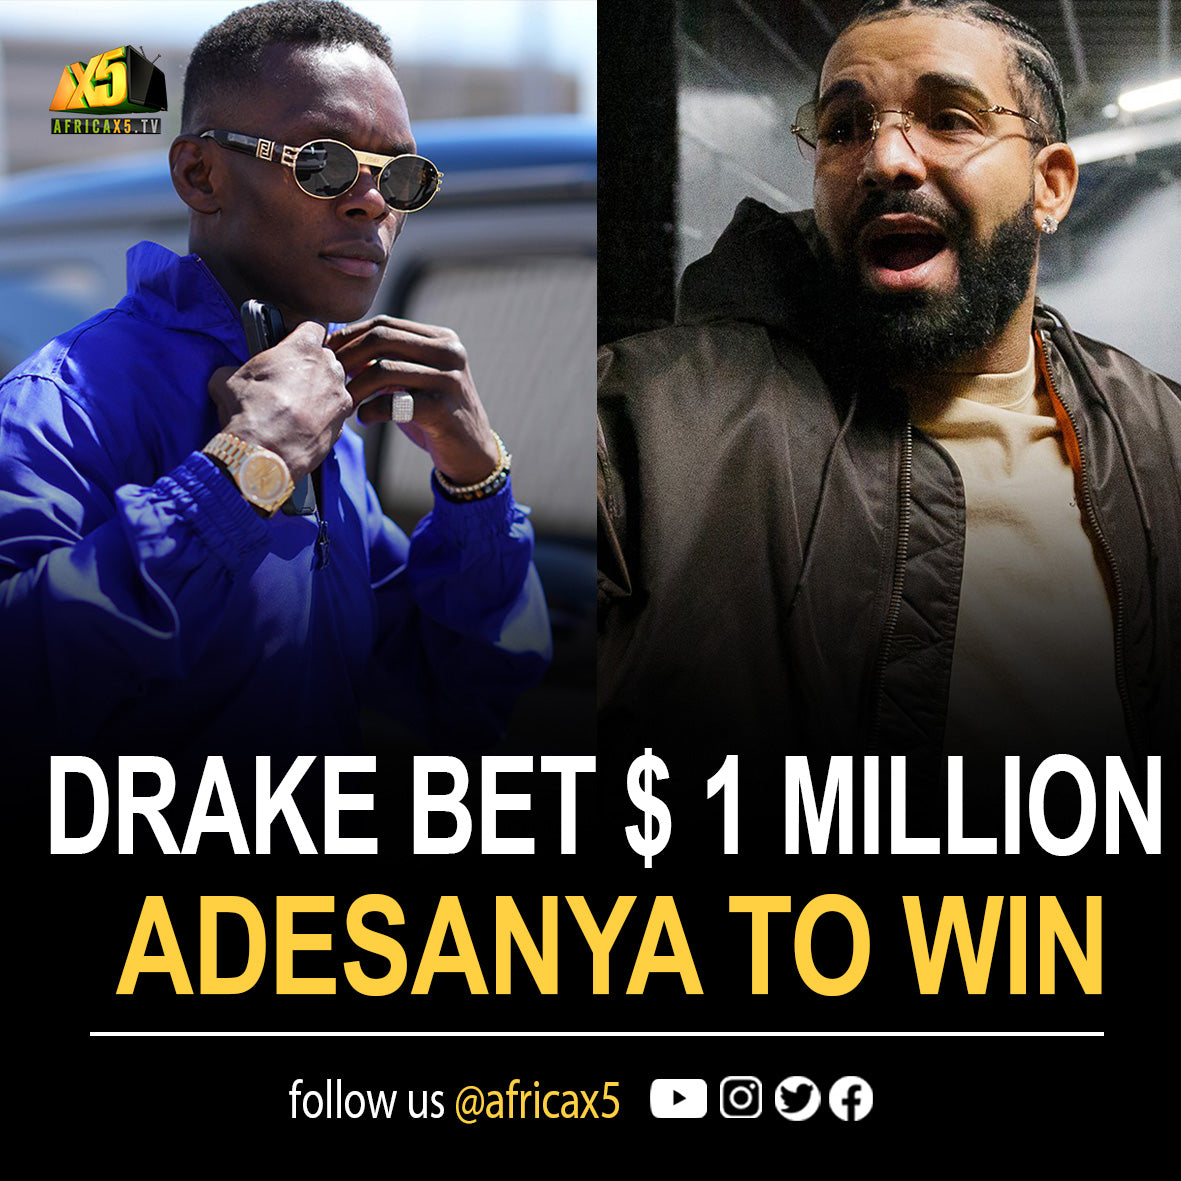 Drake bet $1 Million on Israel Adesanya winning UFC fight and he wins.